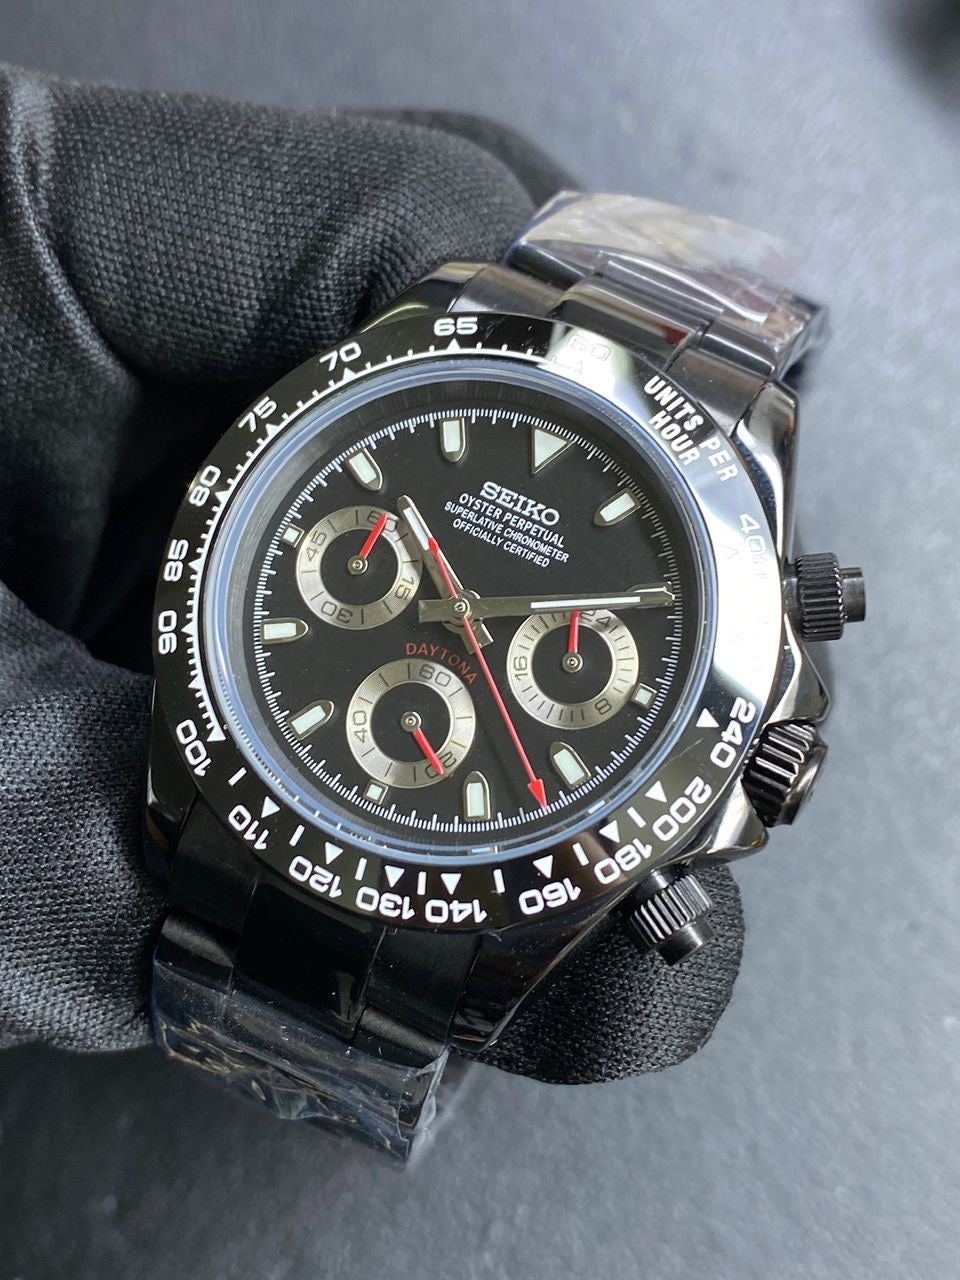 Seiko mod blackout racing Daytona VK63 meca quartz chronograph watch